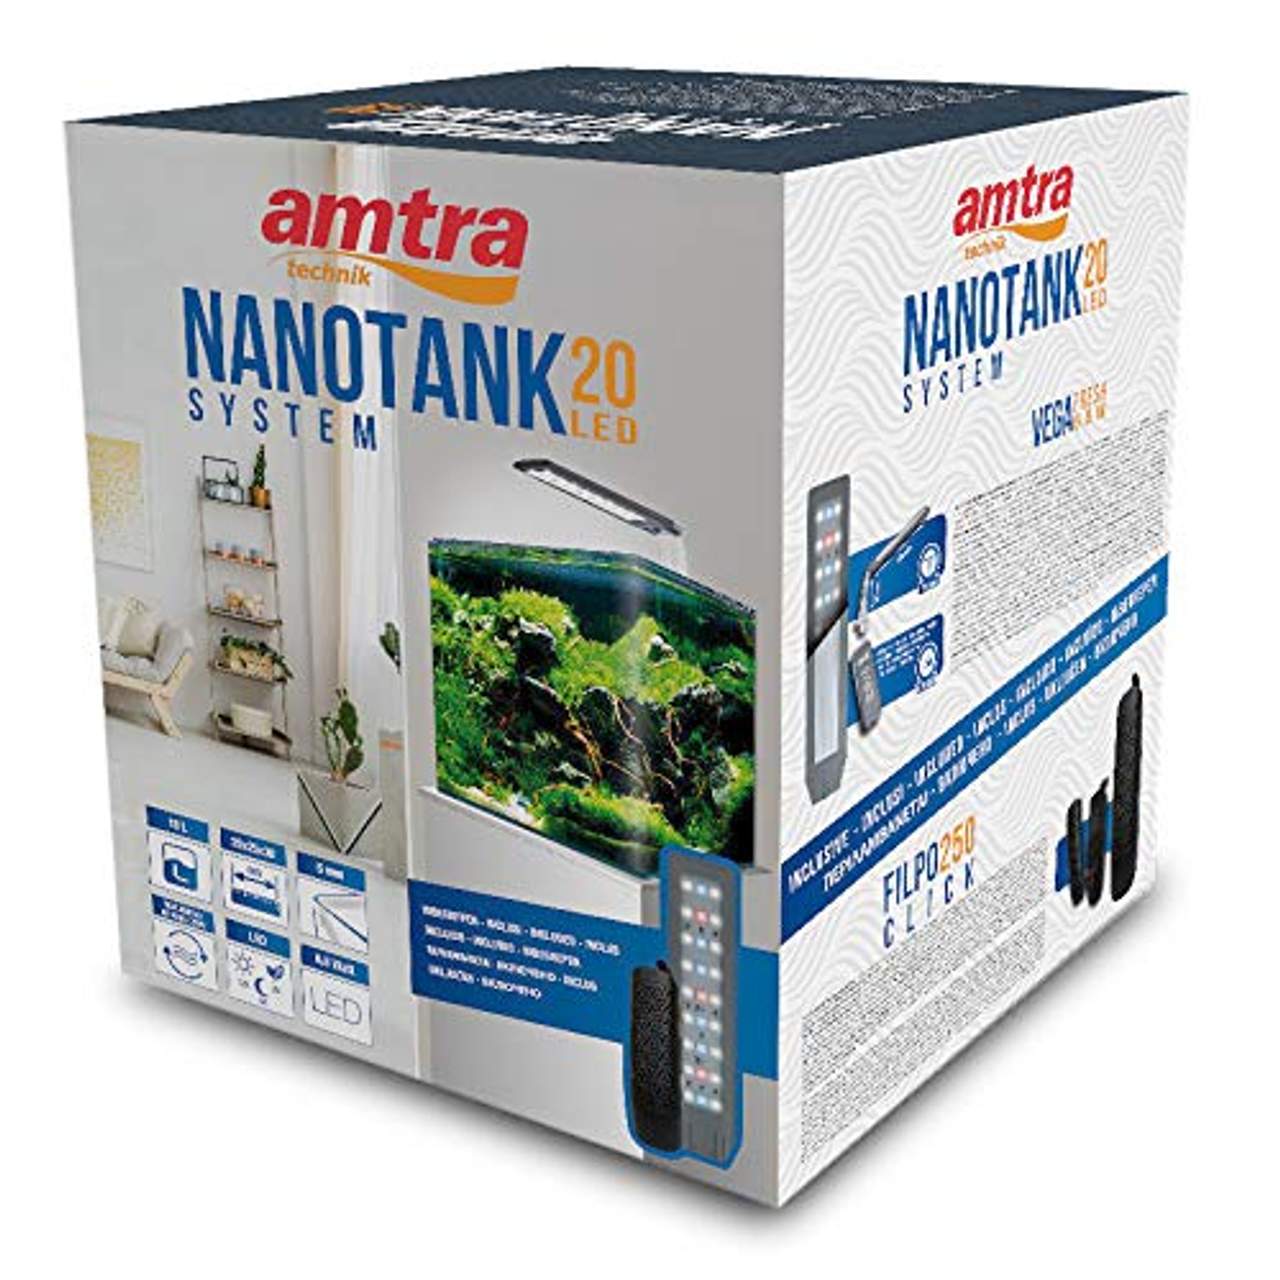 Amtra Nanotank Cube System 20